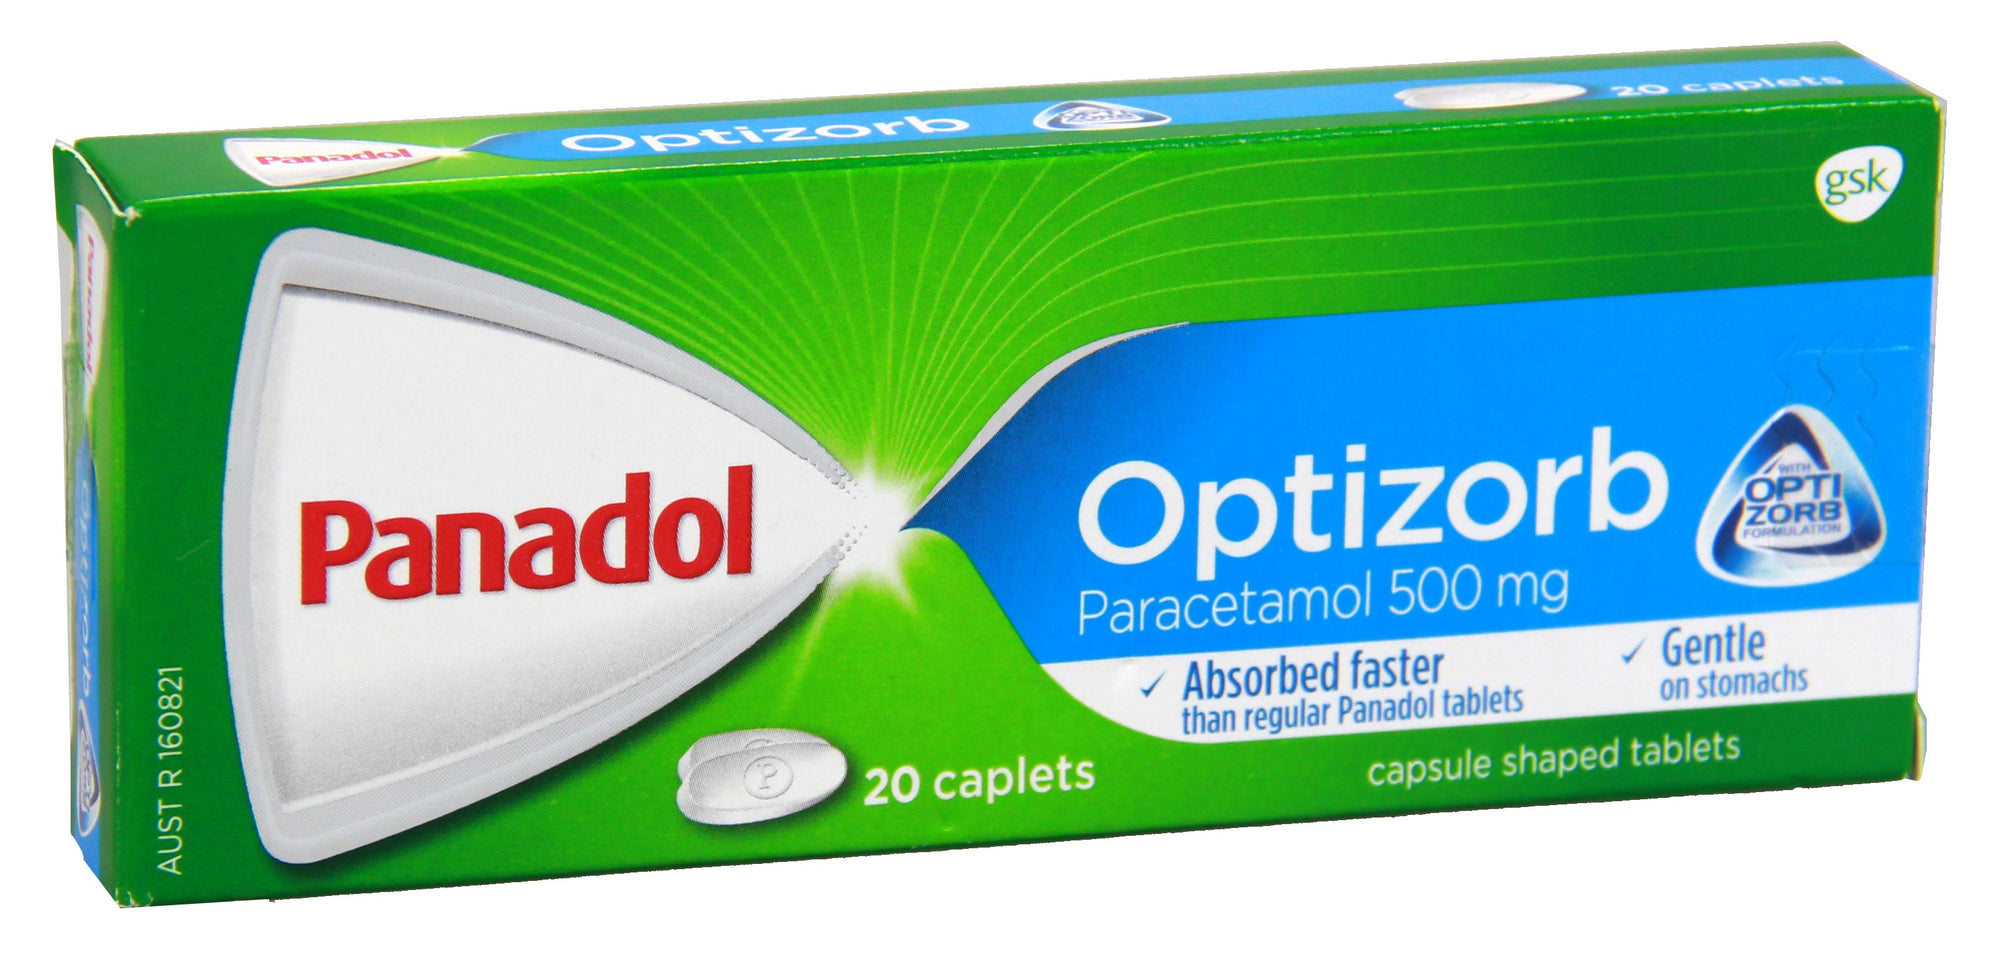 Panadol Tablets with Optizorb 20pk